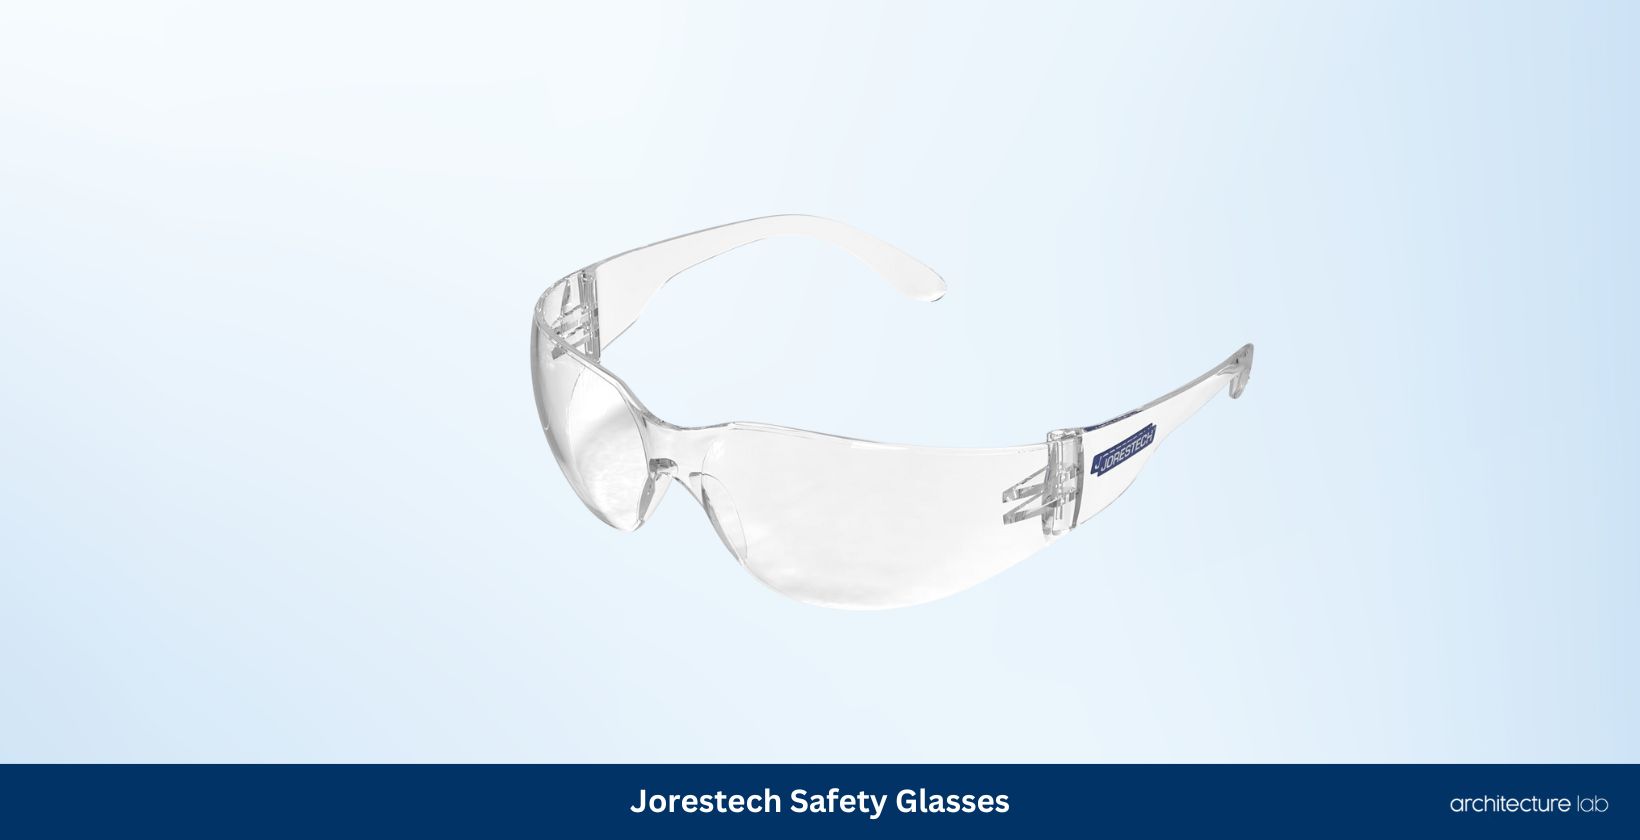 Jorestech eyewear protective safety glasses